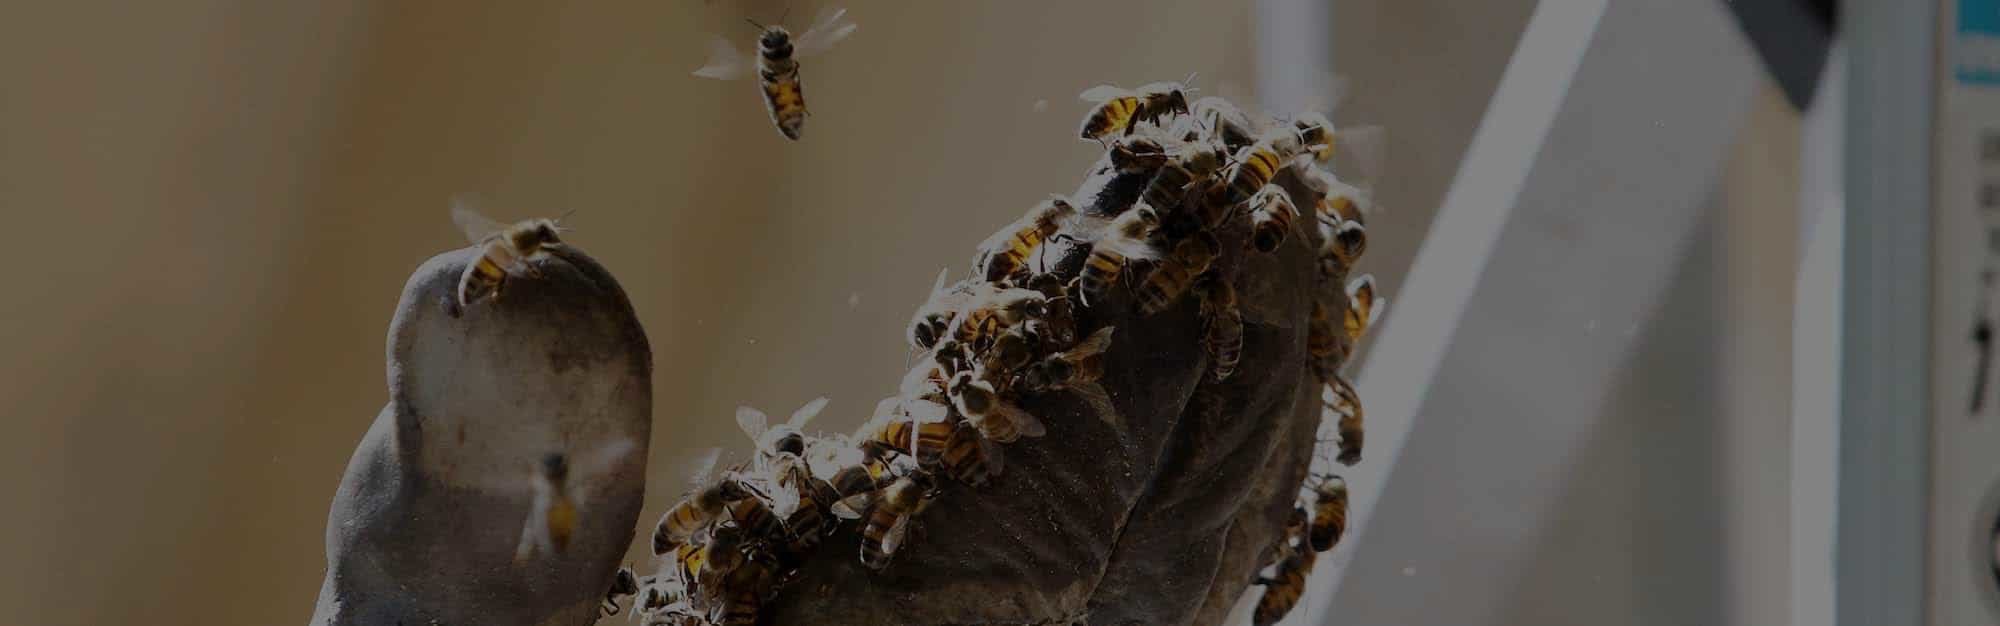 DELPA-Bee-Removal-Experts-in-Houston-Texas-v005